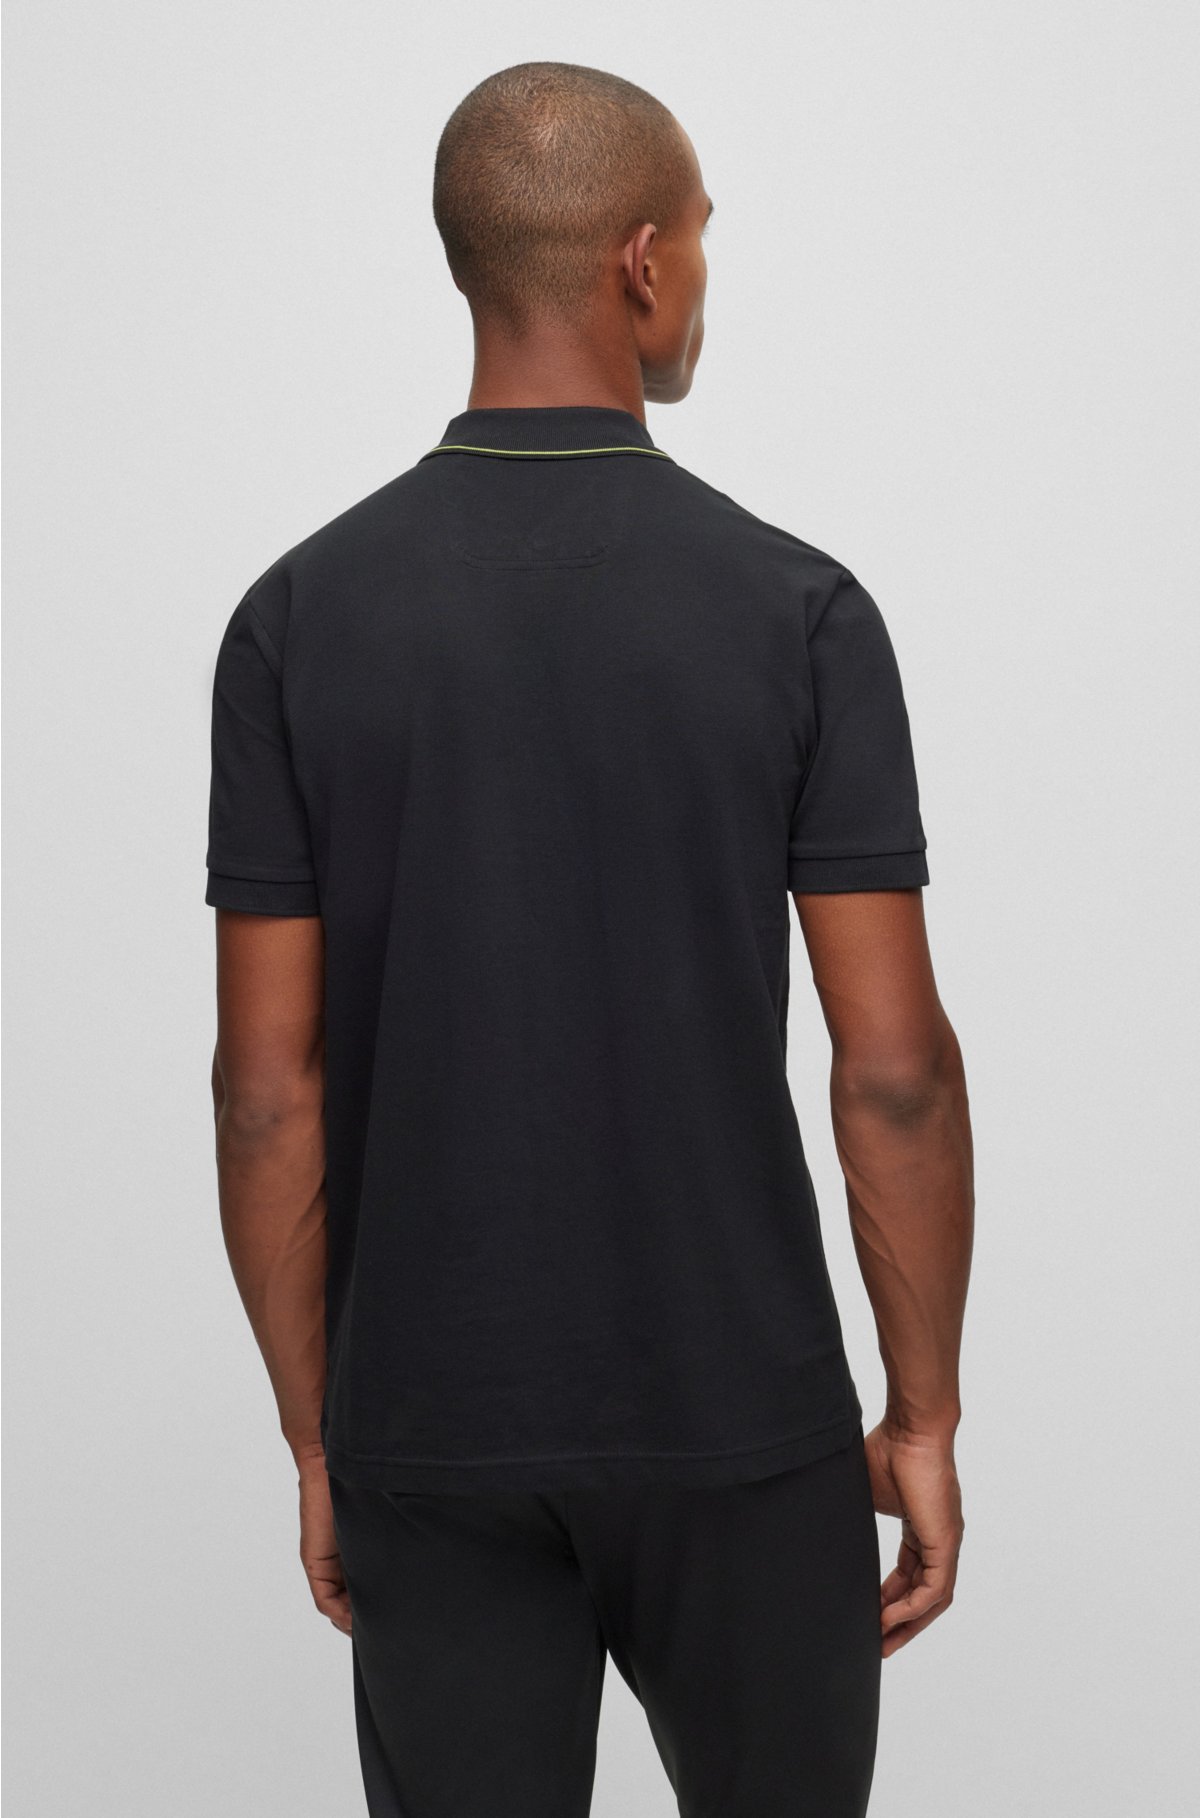 Cotton-piqué slim-fit polo shirt with logo details, Dark Grey